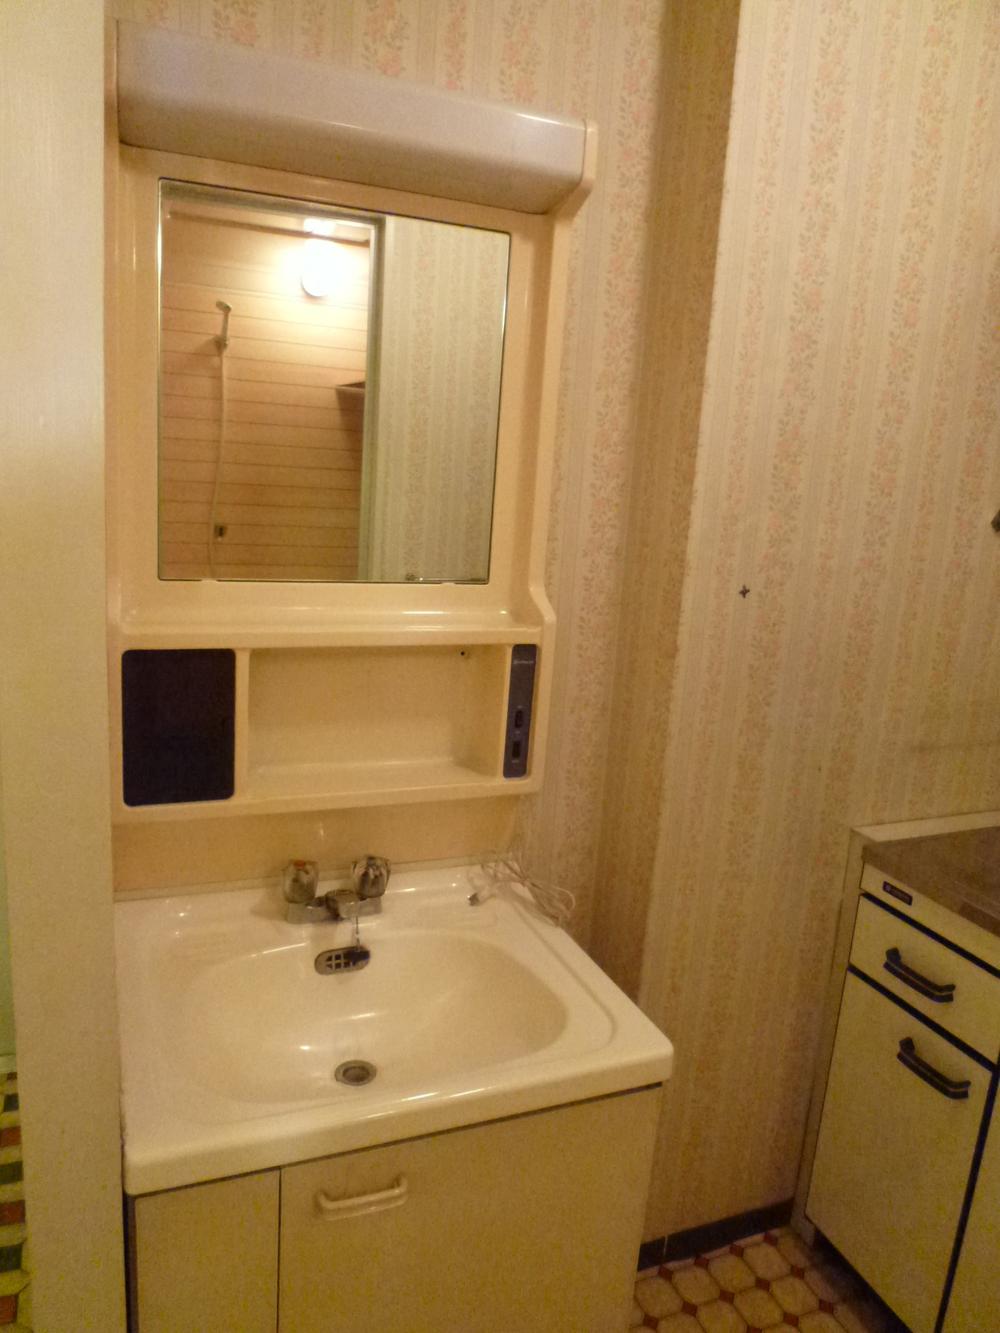 Wash basin, toilet. Room (August 2013) Shooting